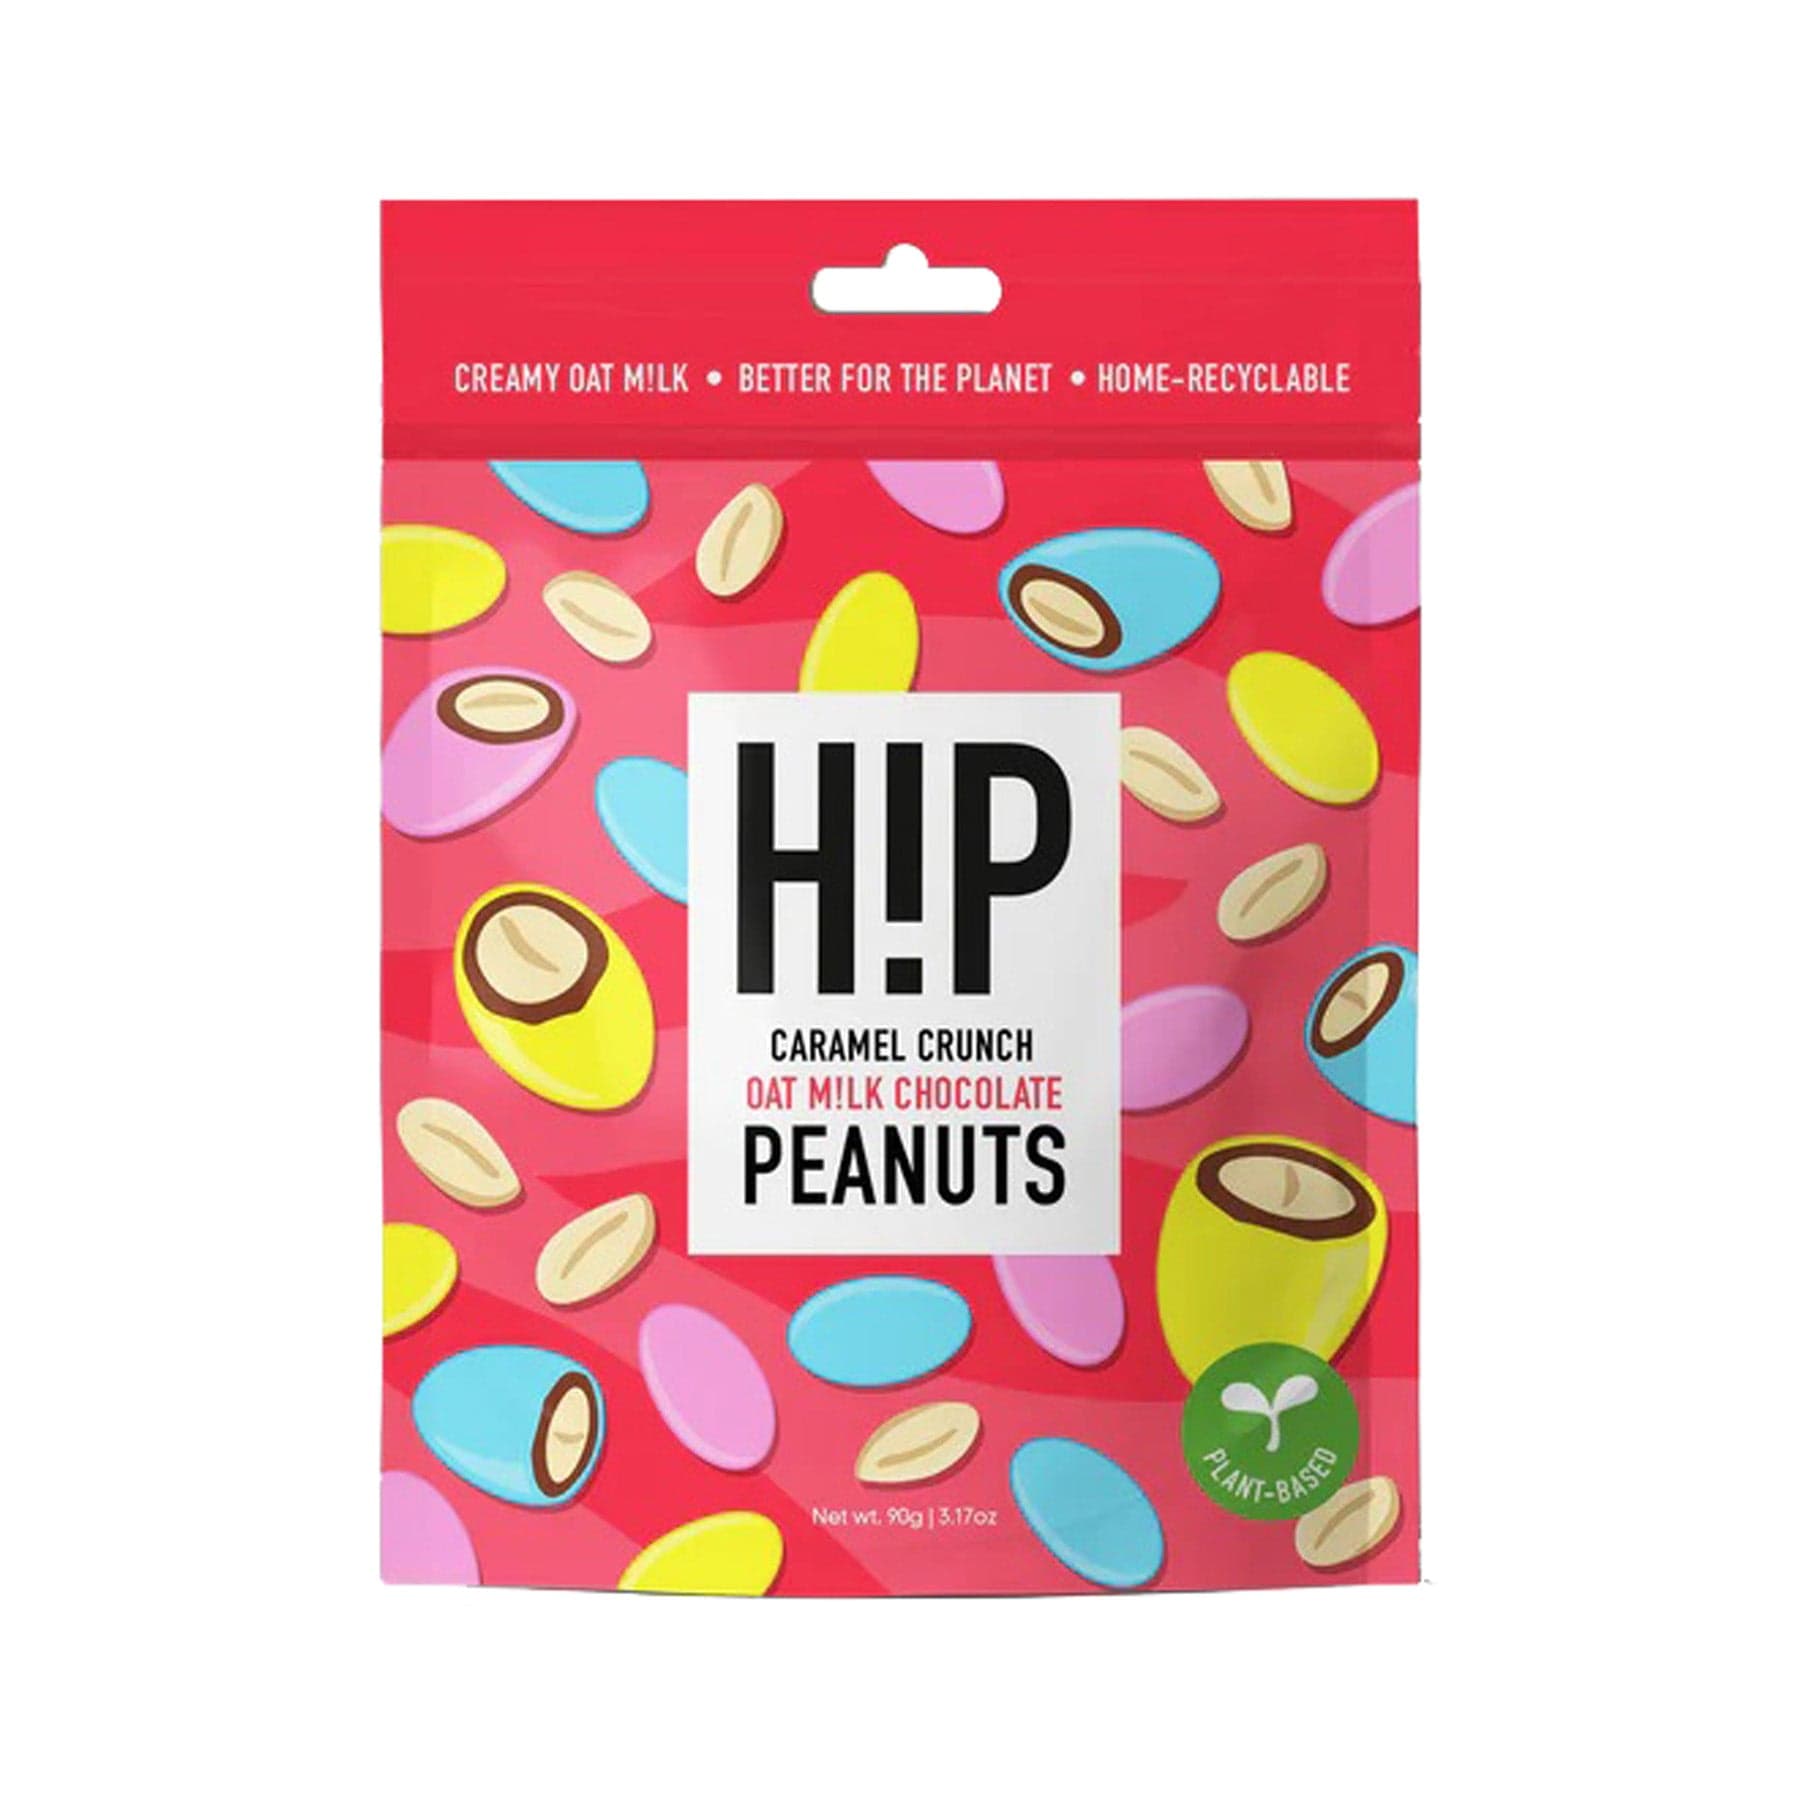 H!p caramel crunch peanuts 90g